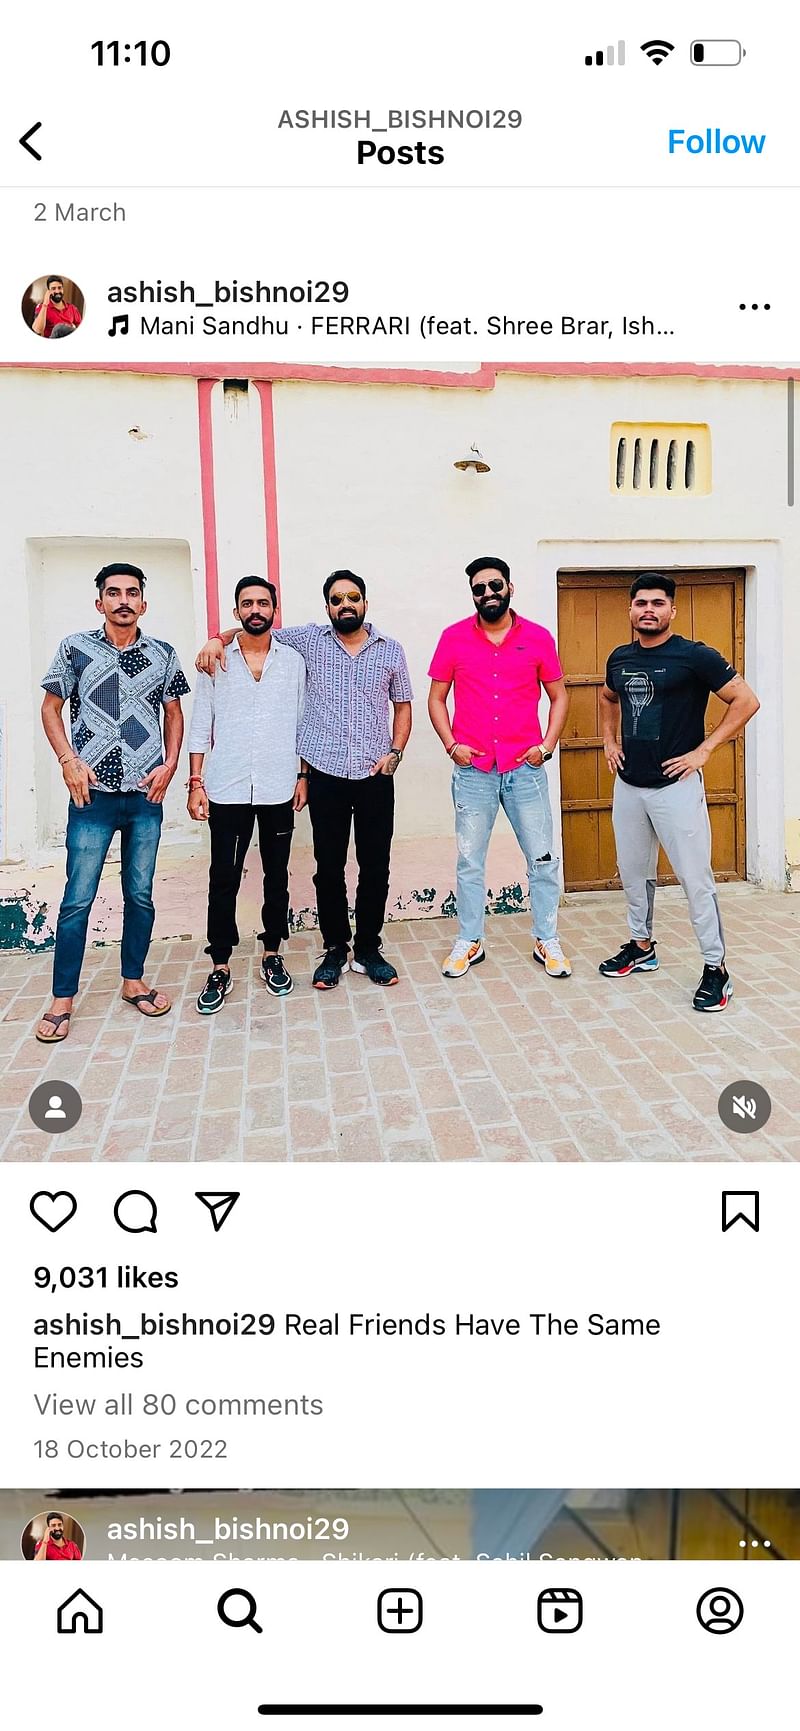  Ashish Bishnoi, Ritik Boxer and others. Photo from Ashish's Instagram handle. | Jyoti Yadav, ThePrint